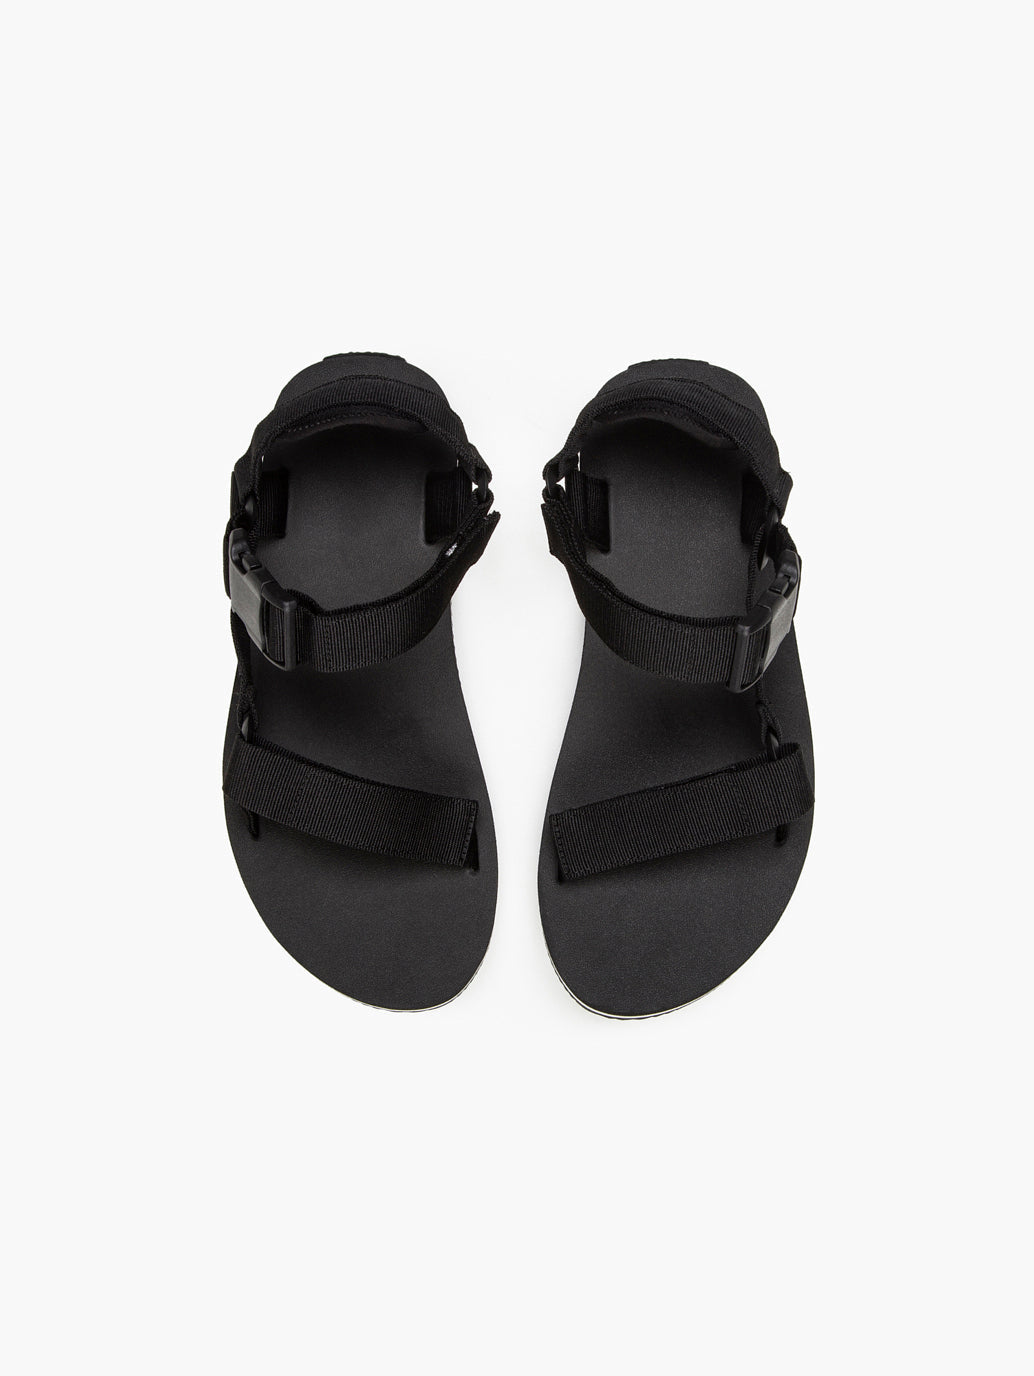 Men's Black Solid Sandals